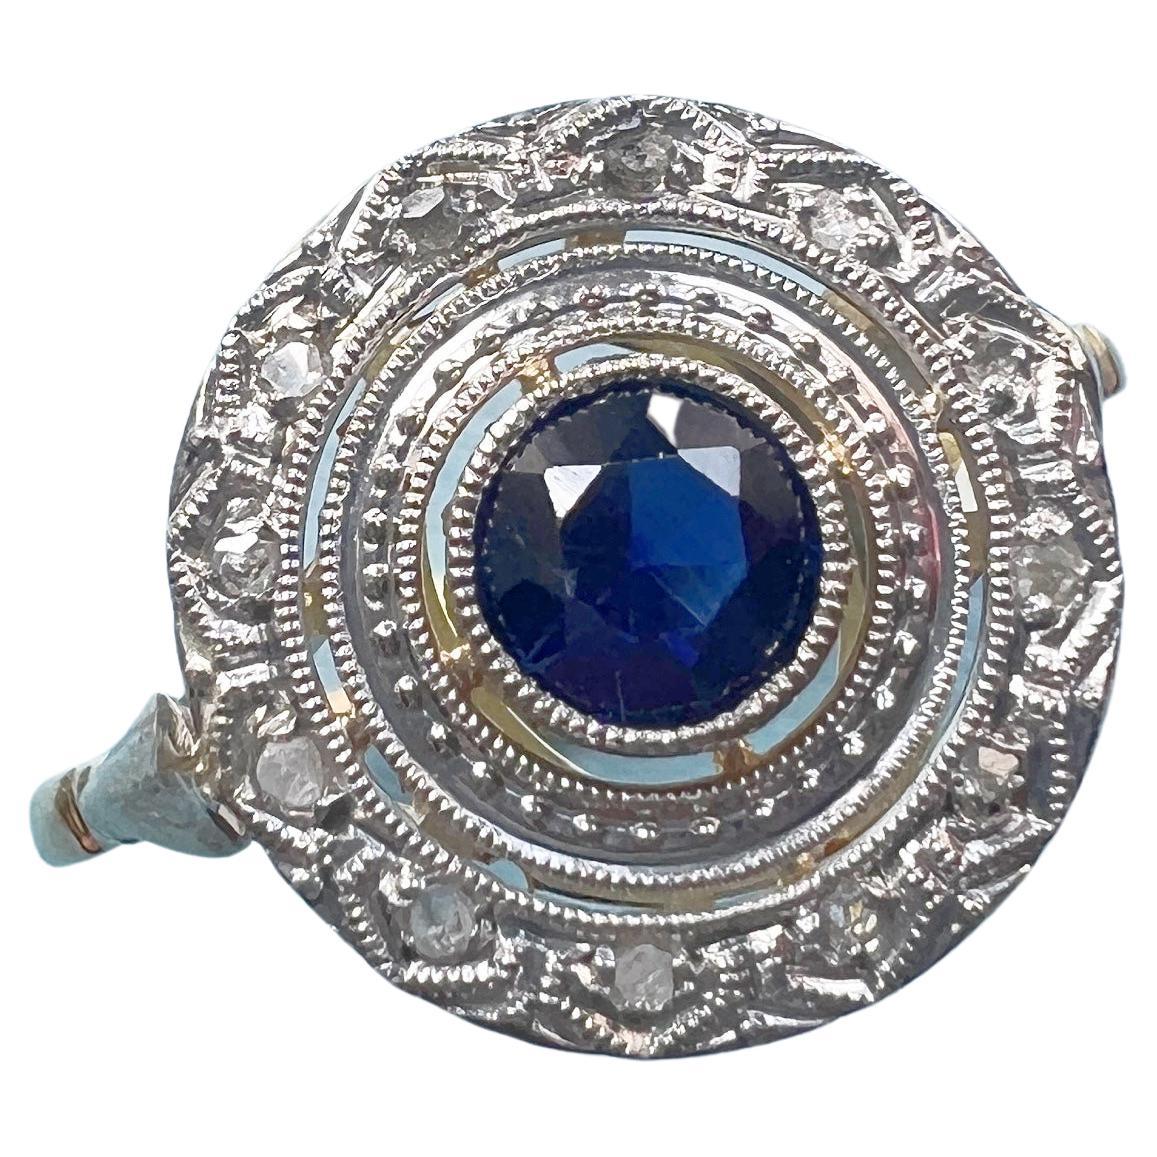 Antique Art Deco era 18K gold diamond blue sapphire ring